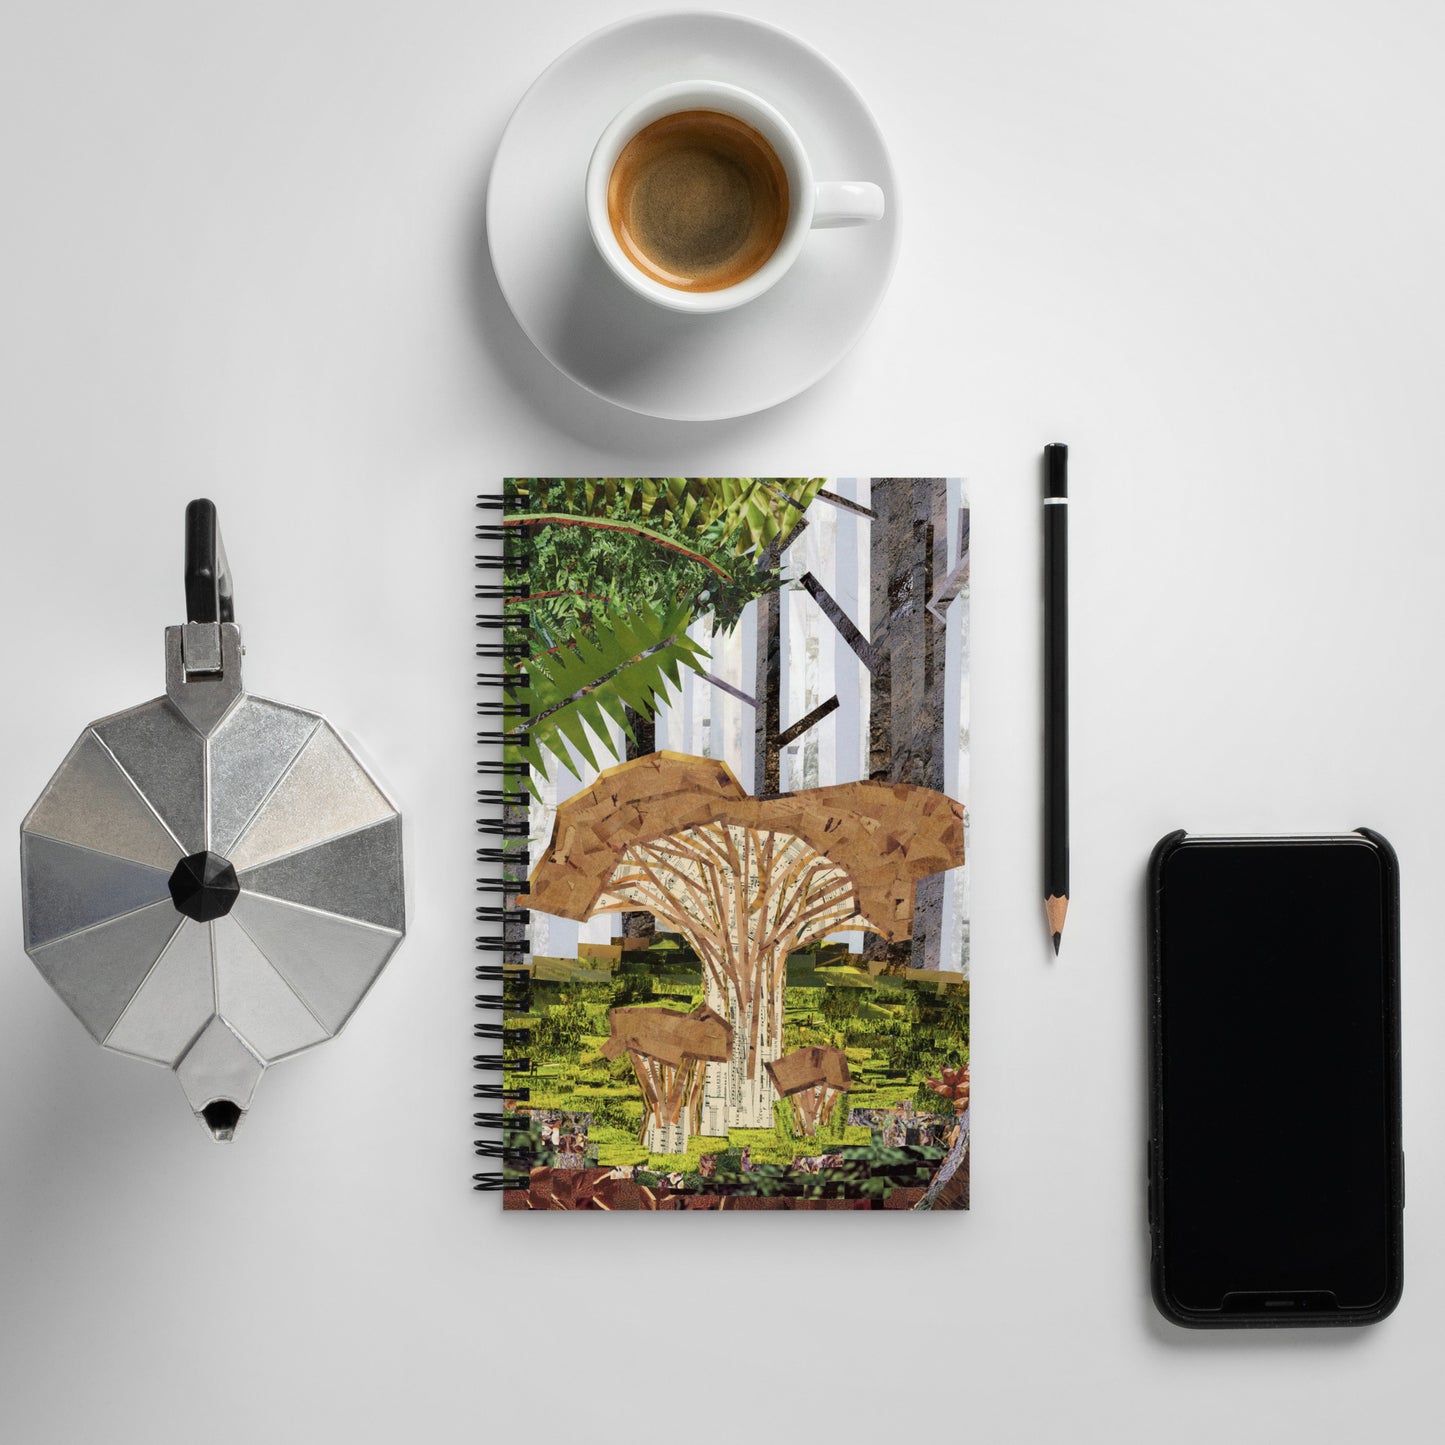 Chantrelle Mushroom Spiral Notebook